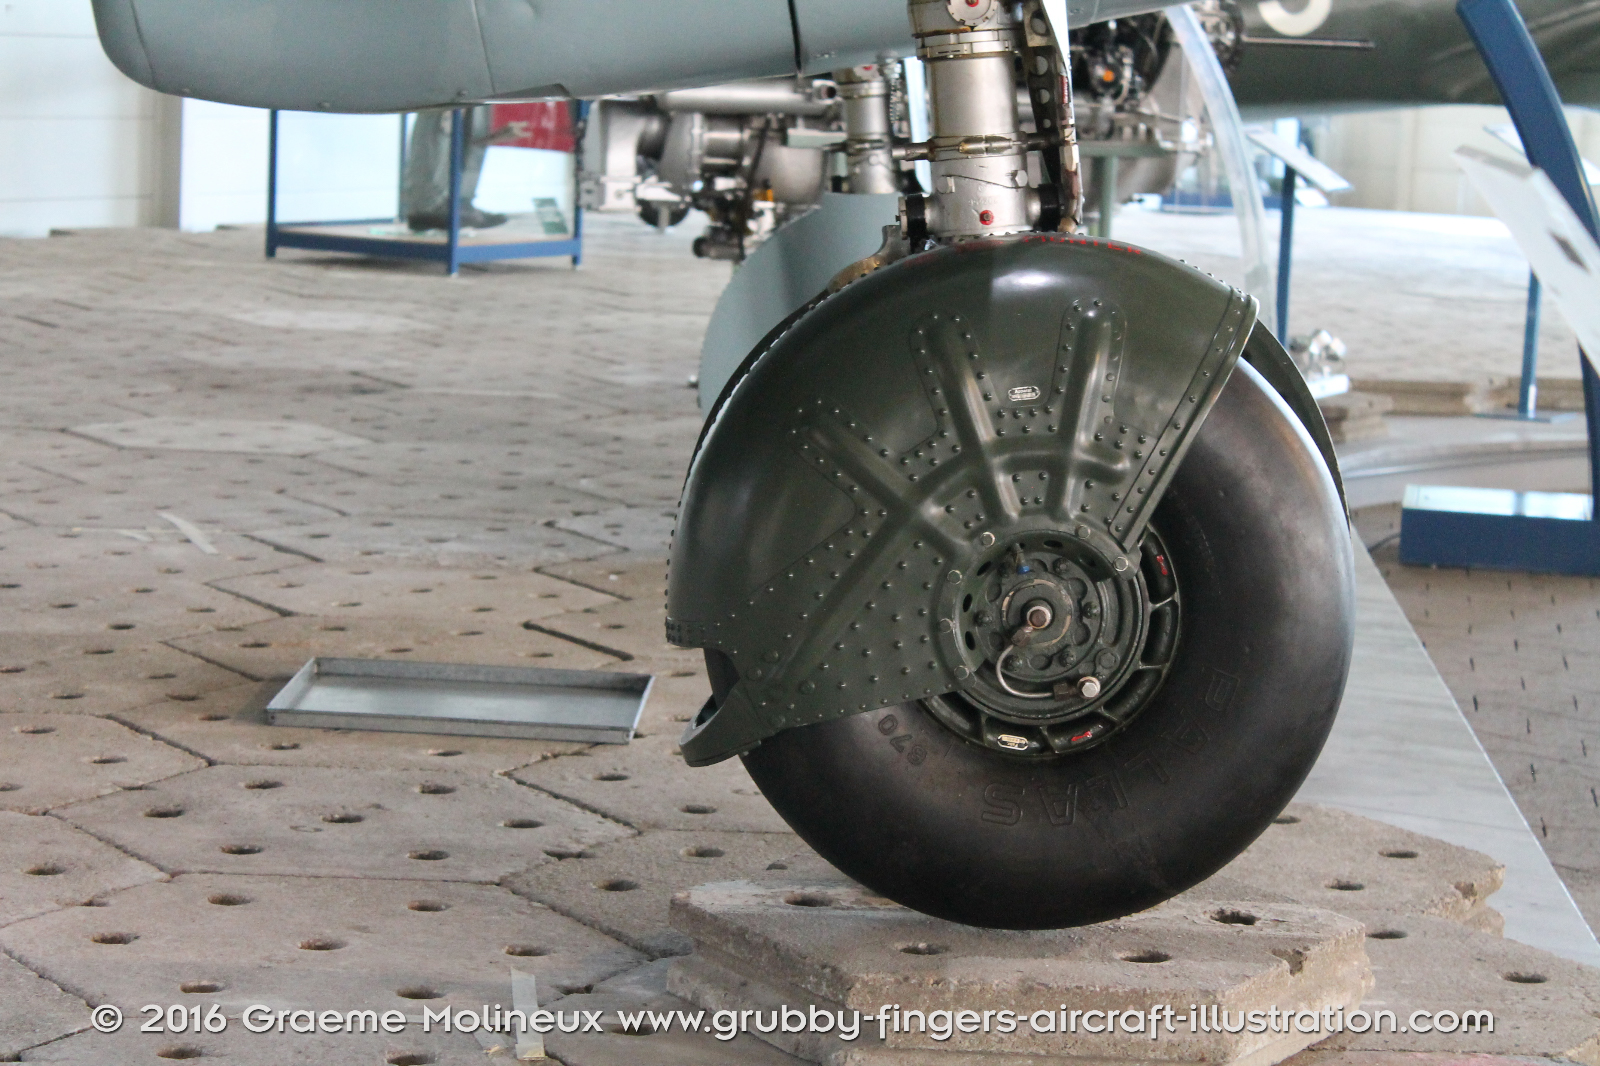 K+W_C-36_C-534_Swiss_Air_Force_Museum_2015_16_GrubbyFingers